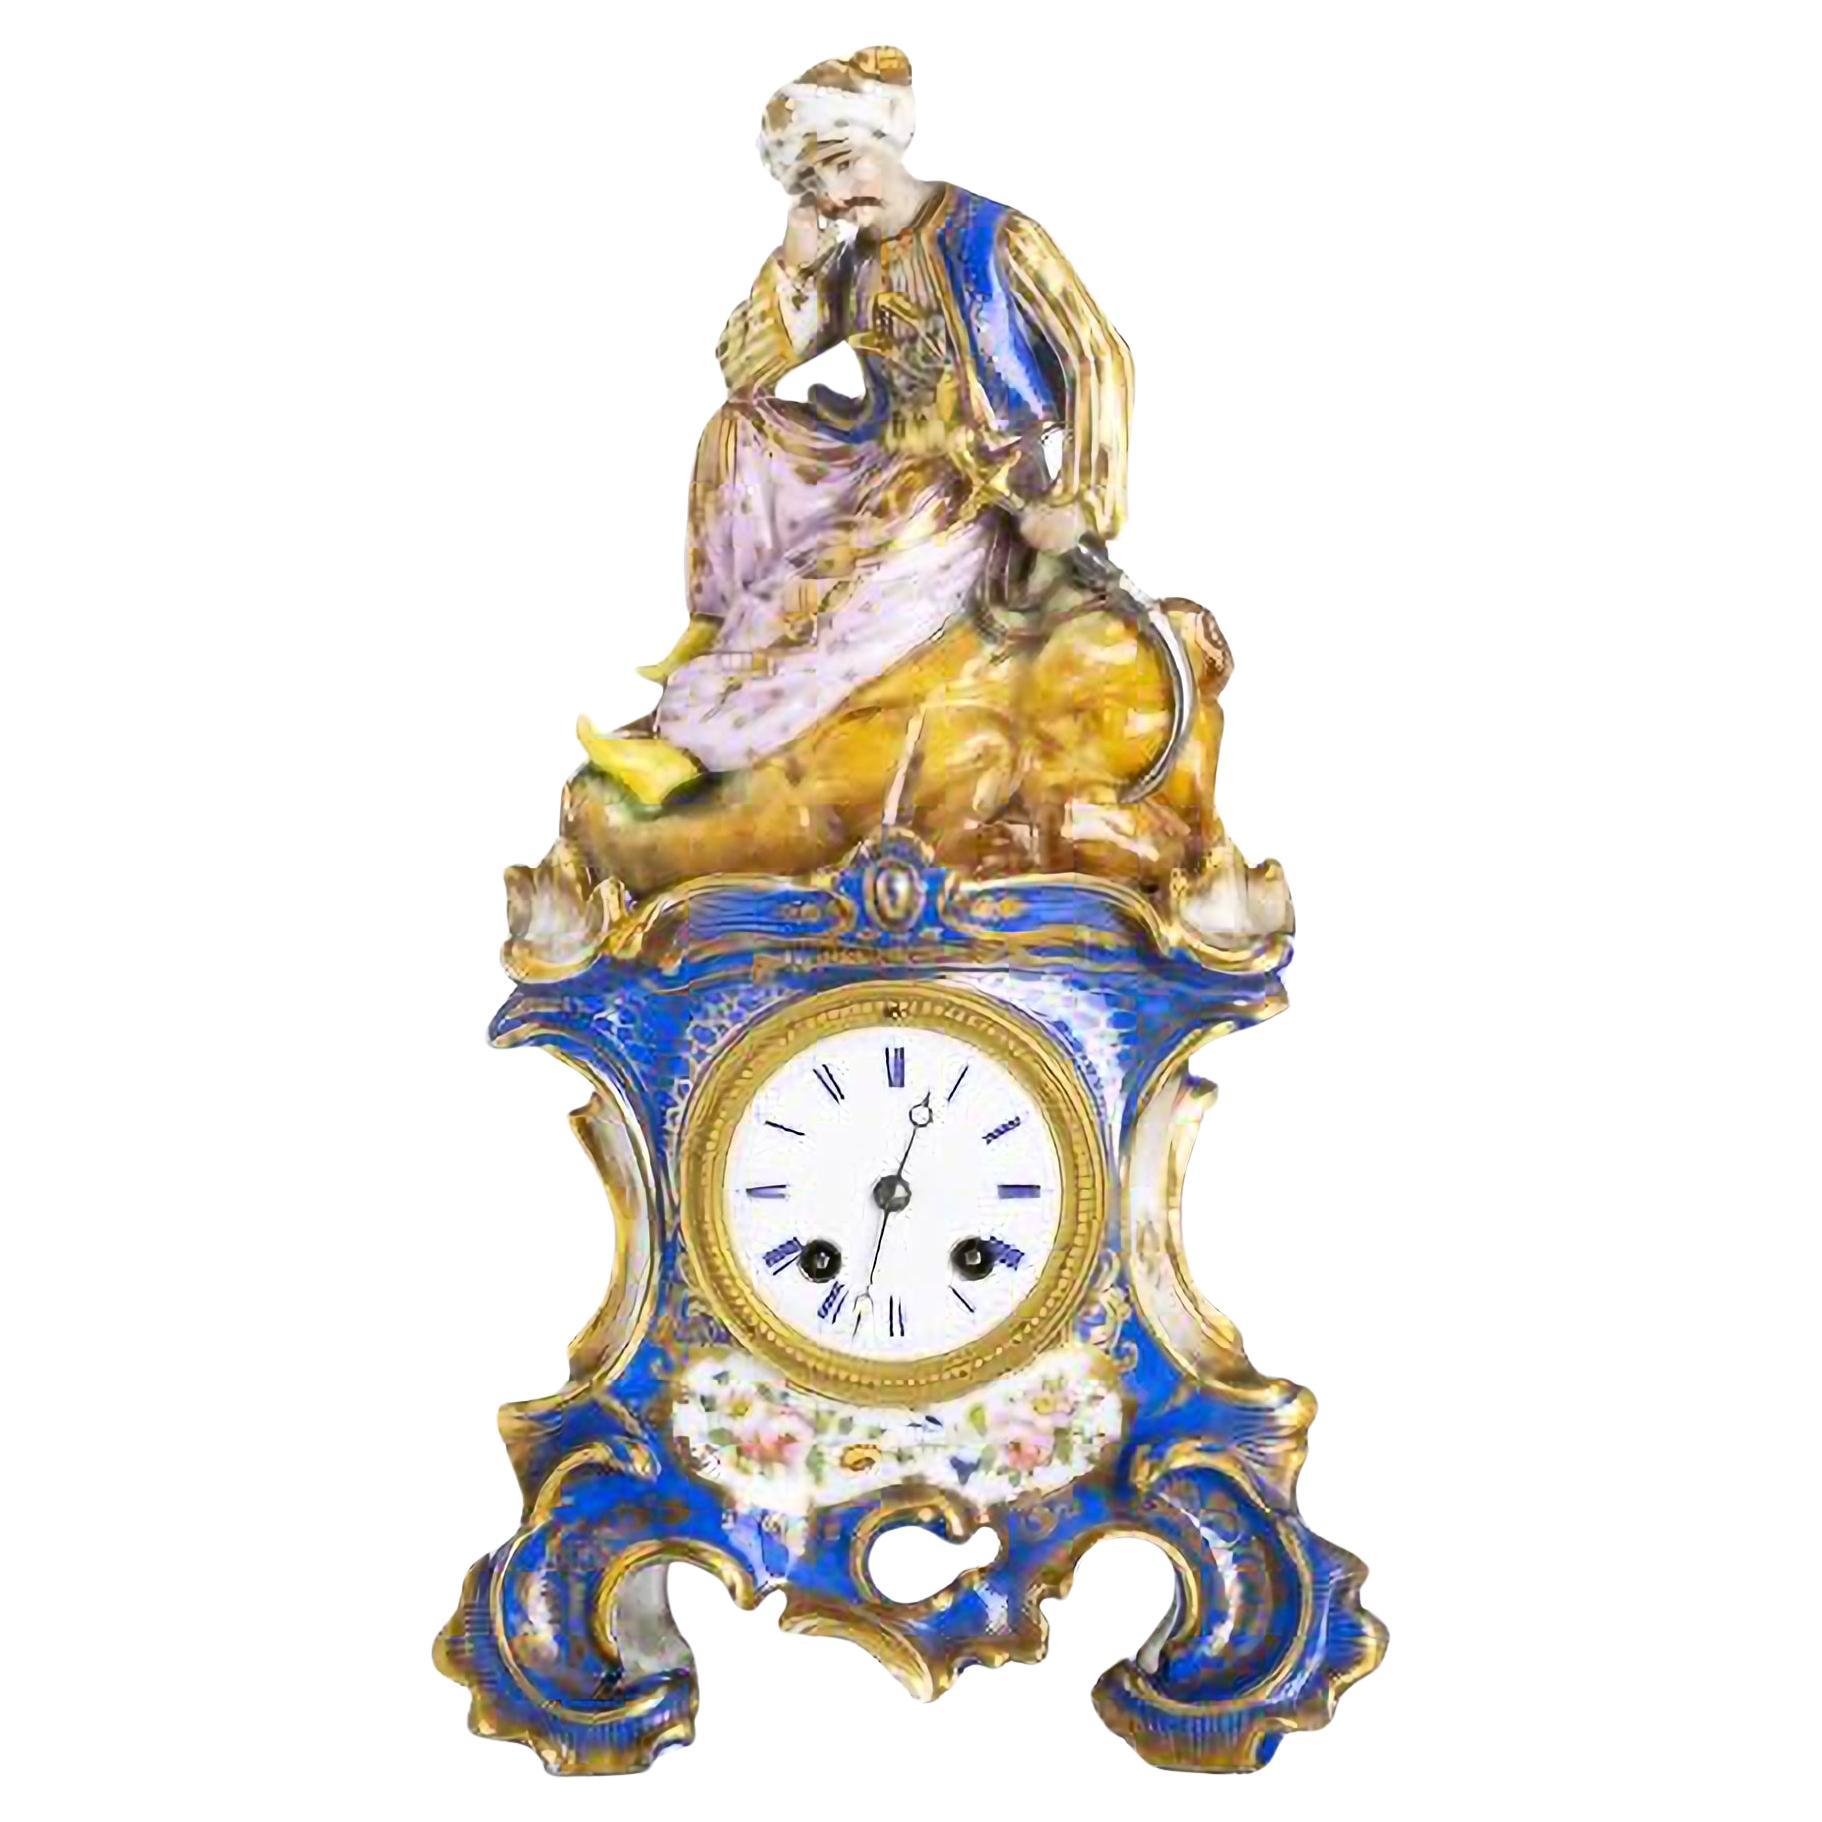 TABLE CLOCK "ARAB WARRIOR" 19th Century ex Christie's